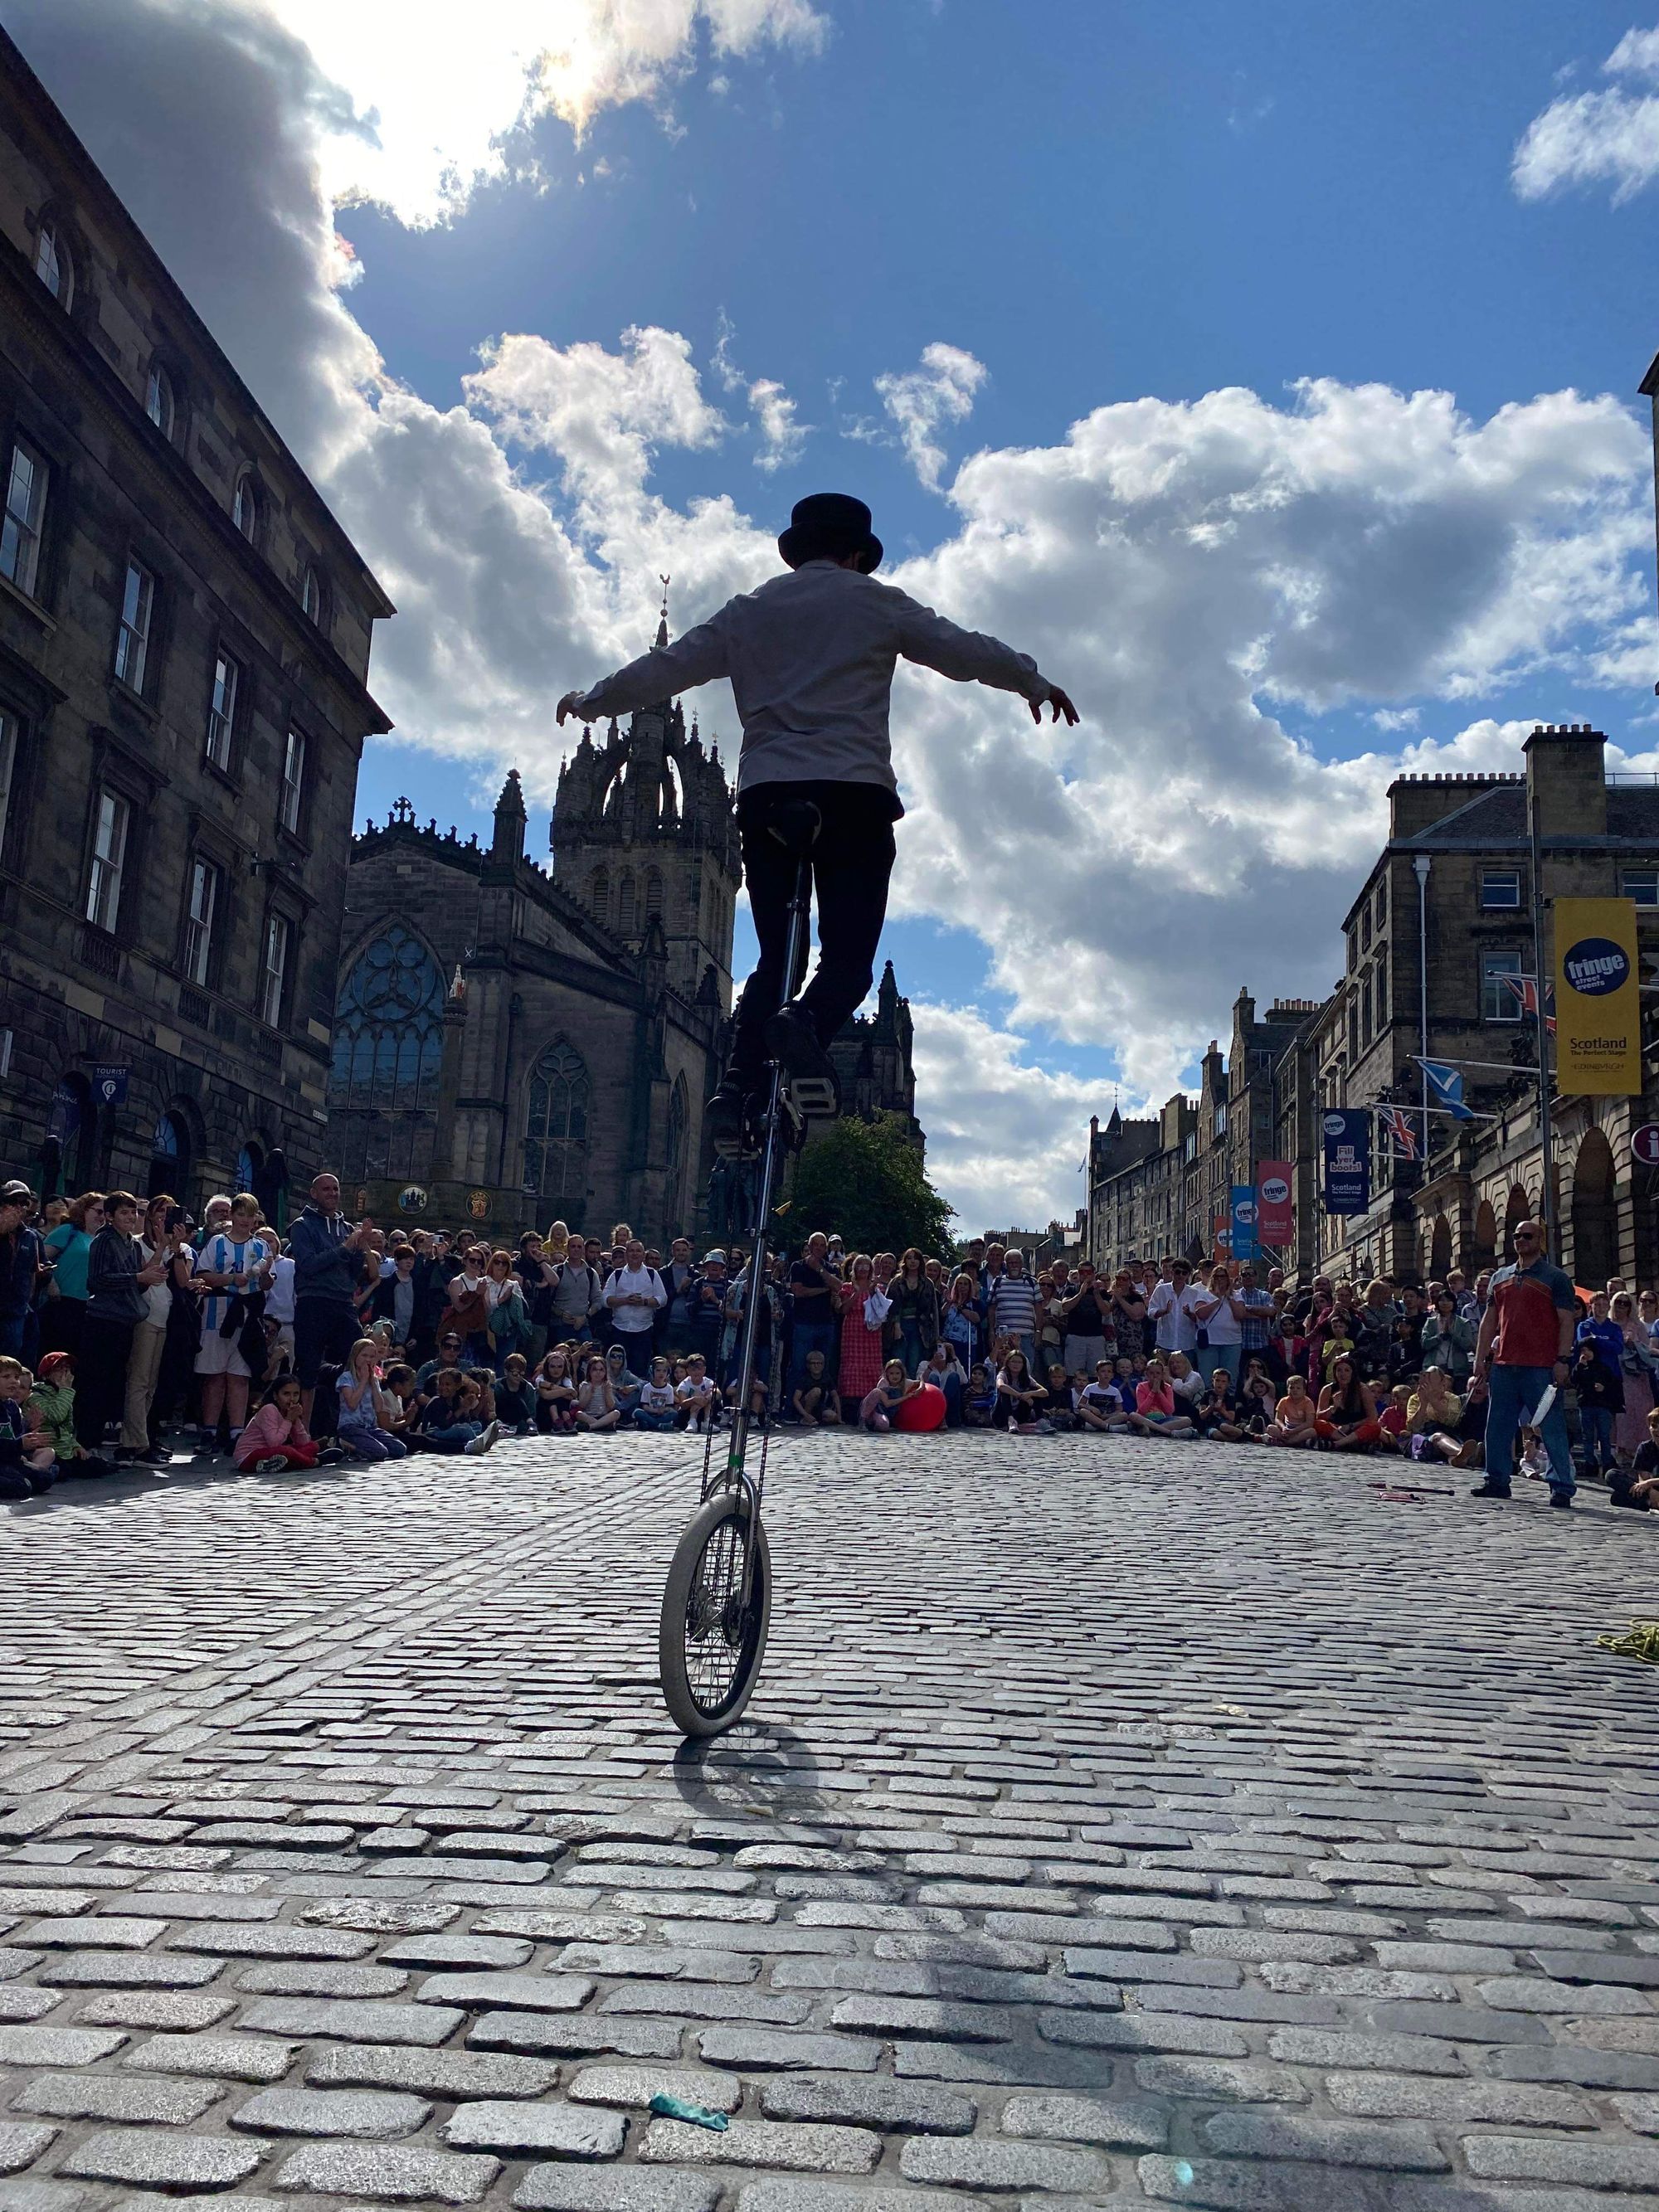 Our Edinburgh Fringe Experience